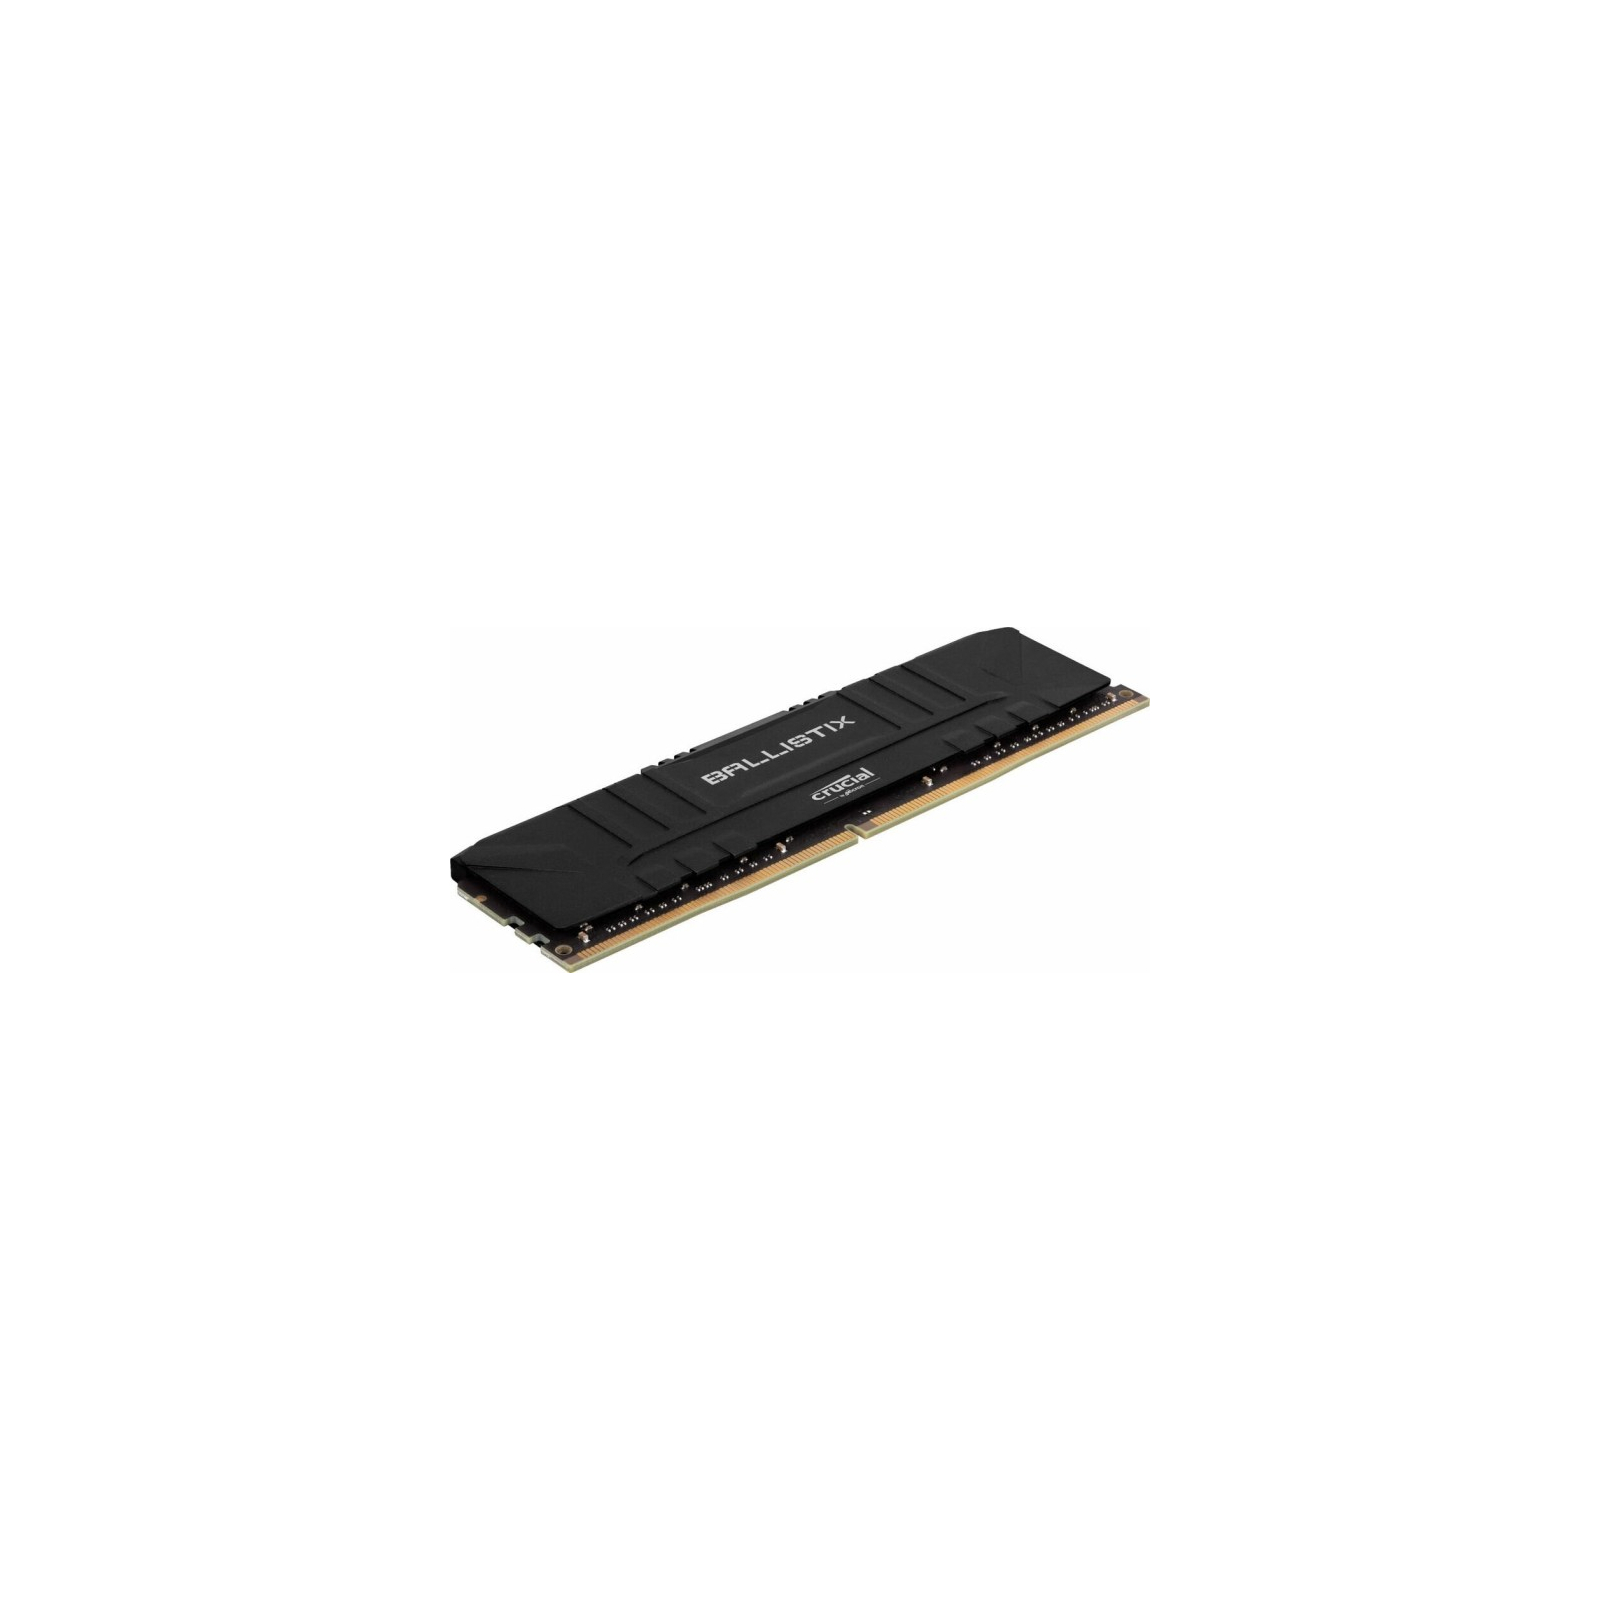 Модуль памяти для компьютера DDR4 16GB (2x8GB) 3000 MHz Ballistix Black Micron (BL2K8G30C15U4B) изображение 2